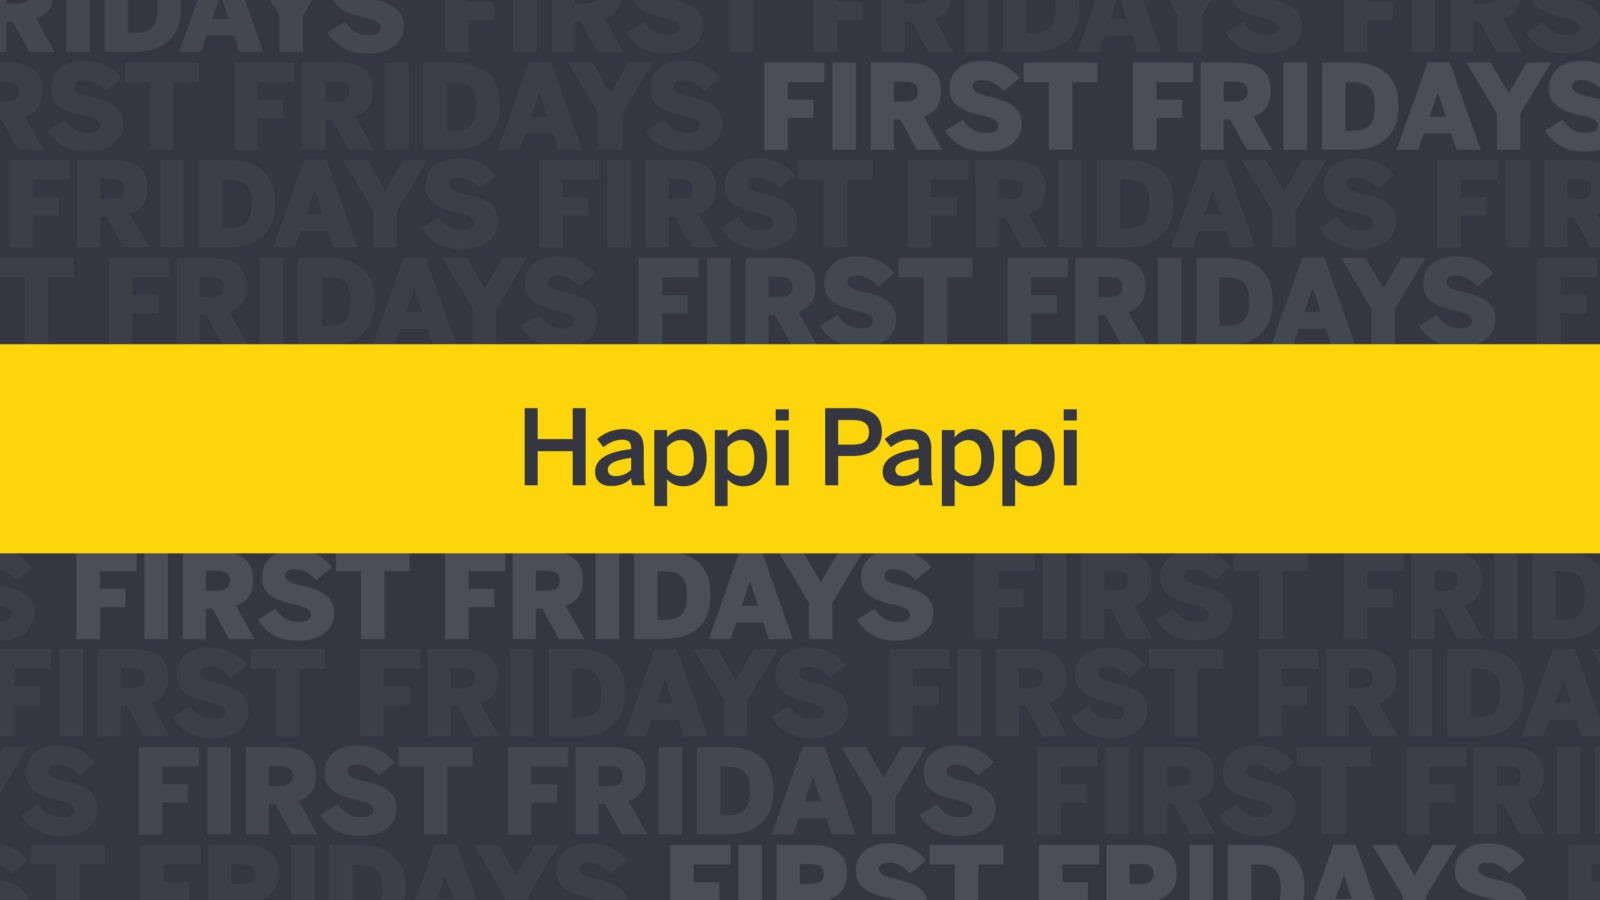 First (Thursday) Fridays: Happi Pappi